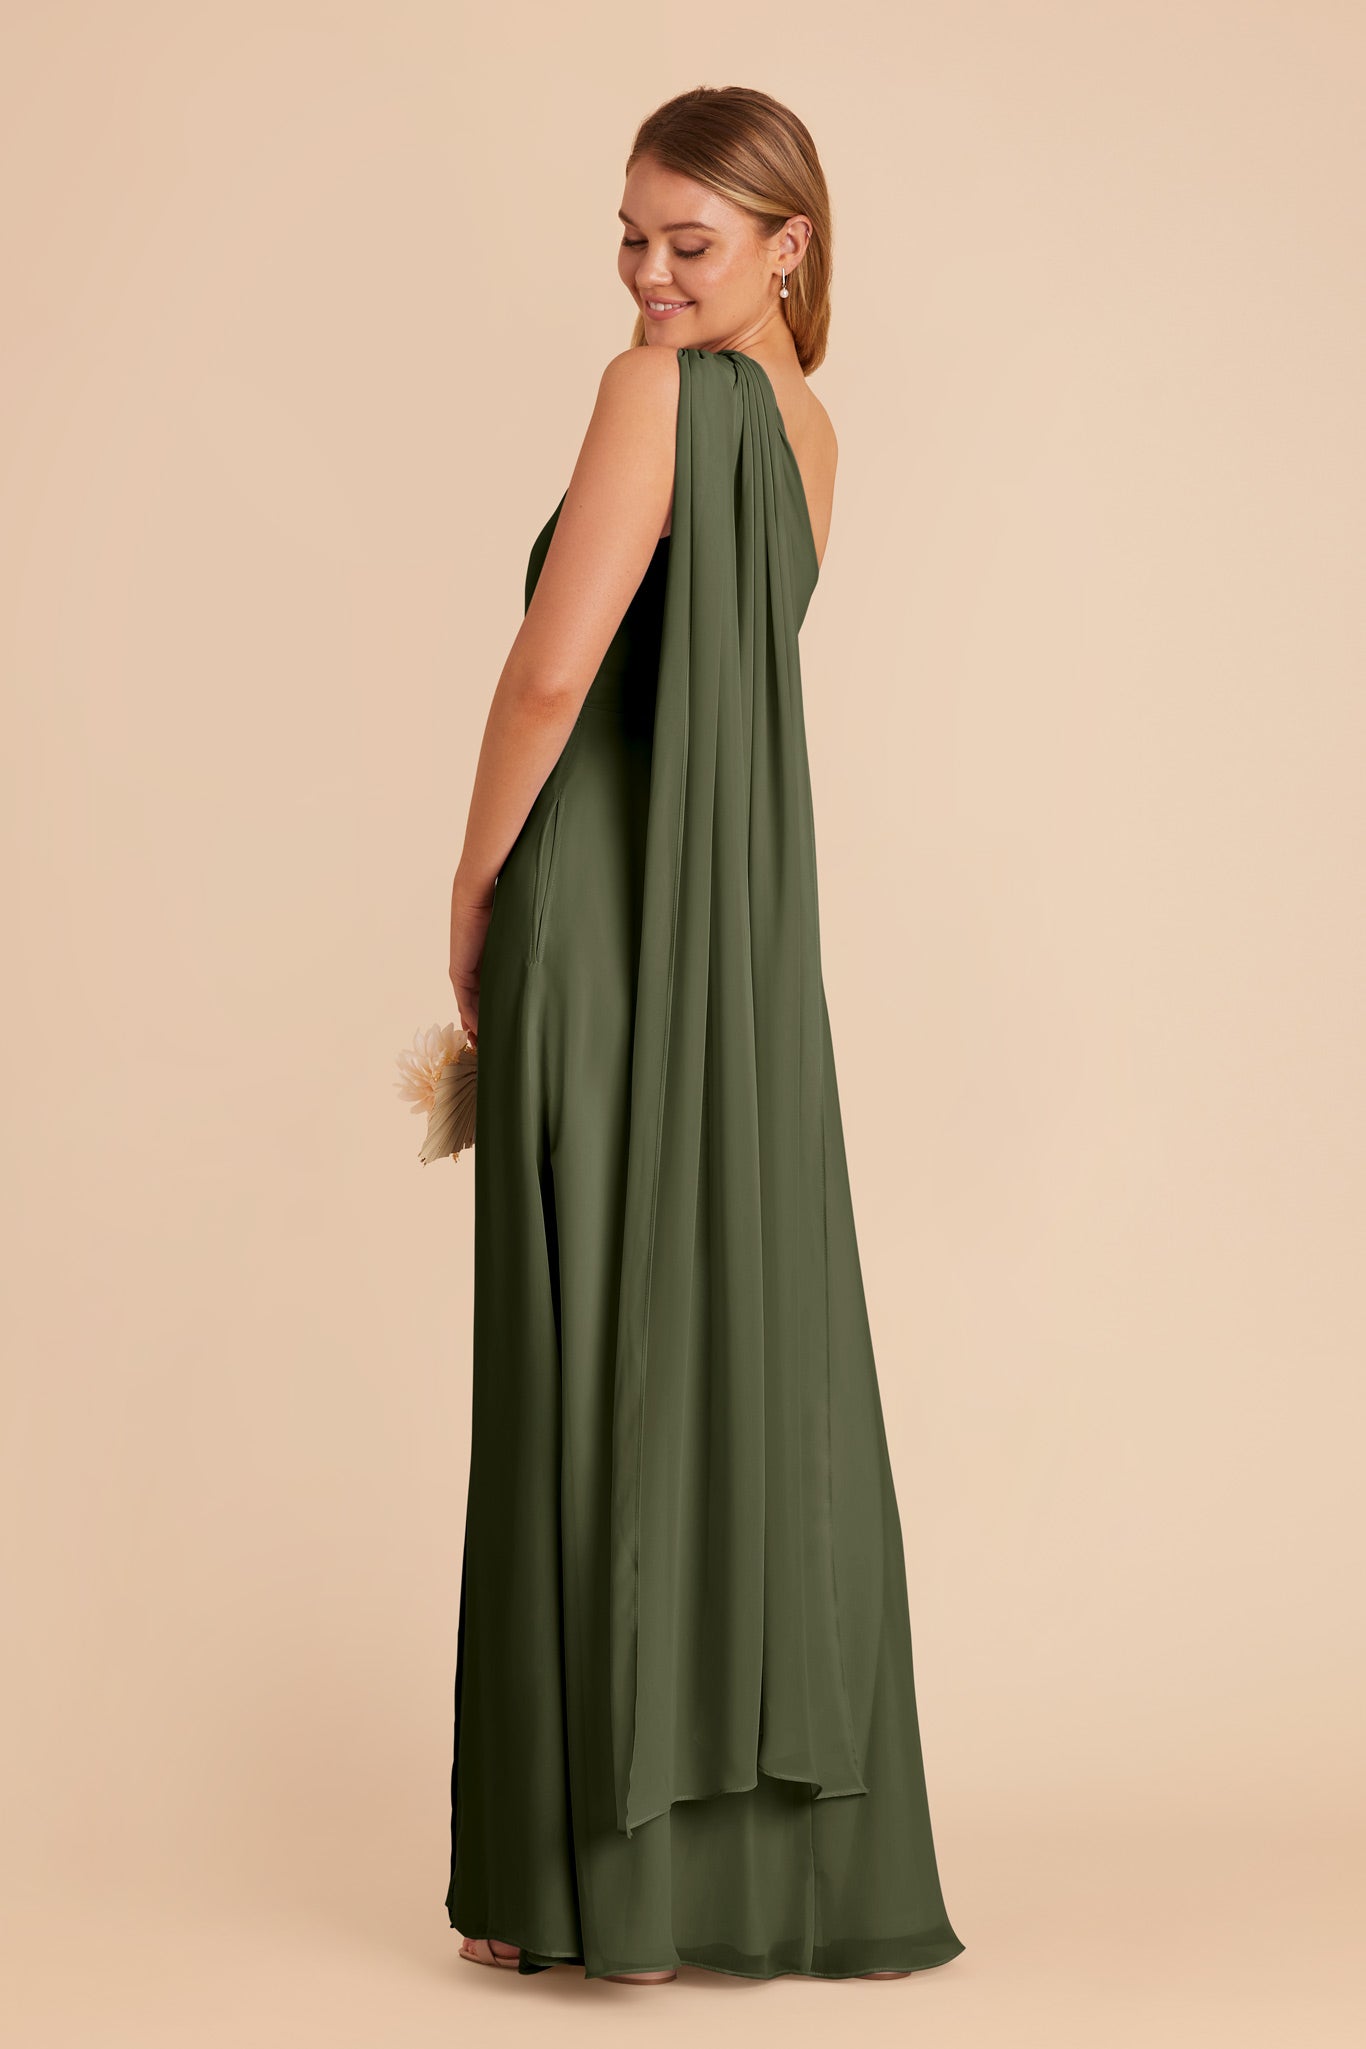 Olive Melissa Chiffon Dress by Birdy Grey